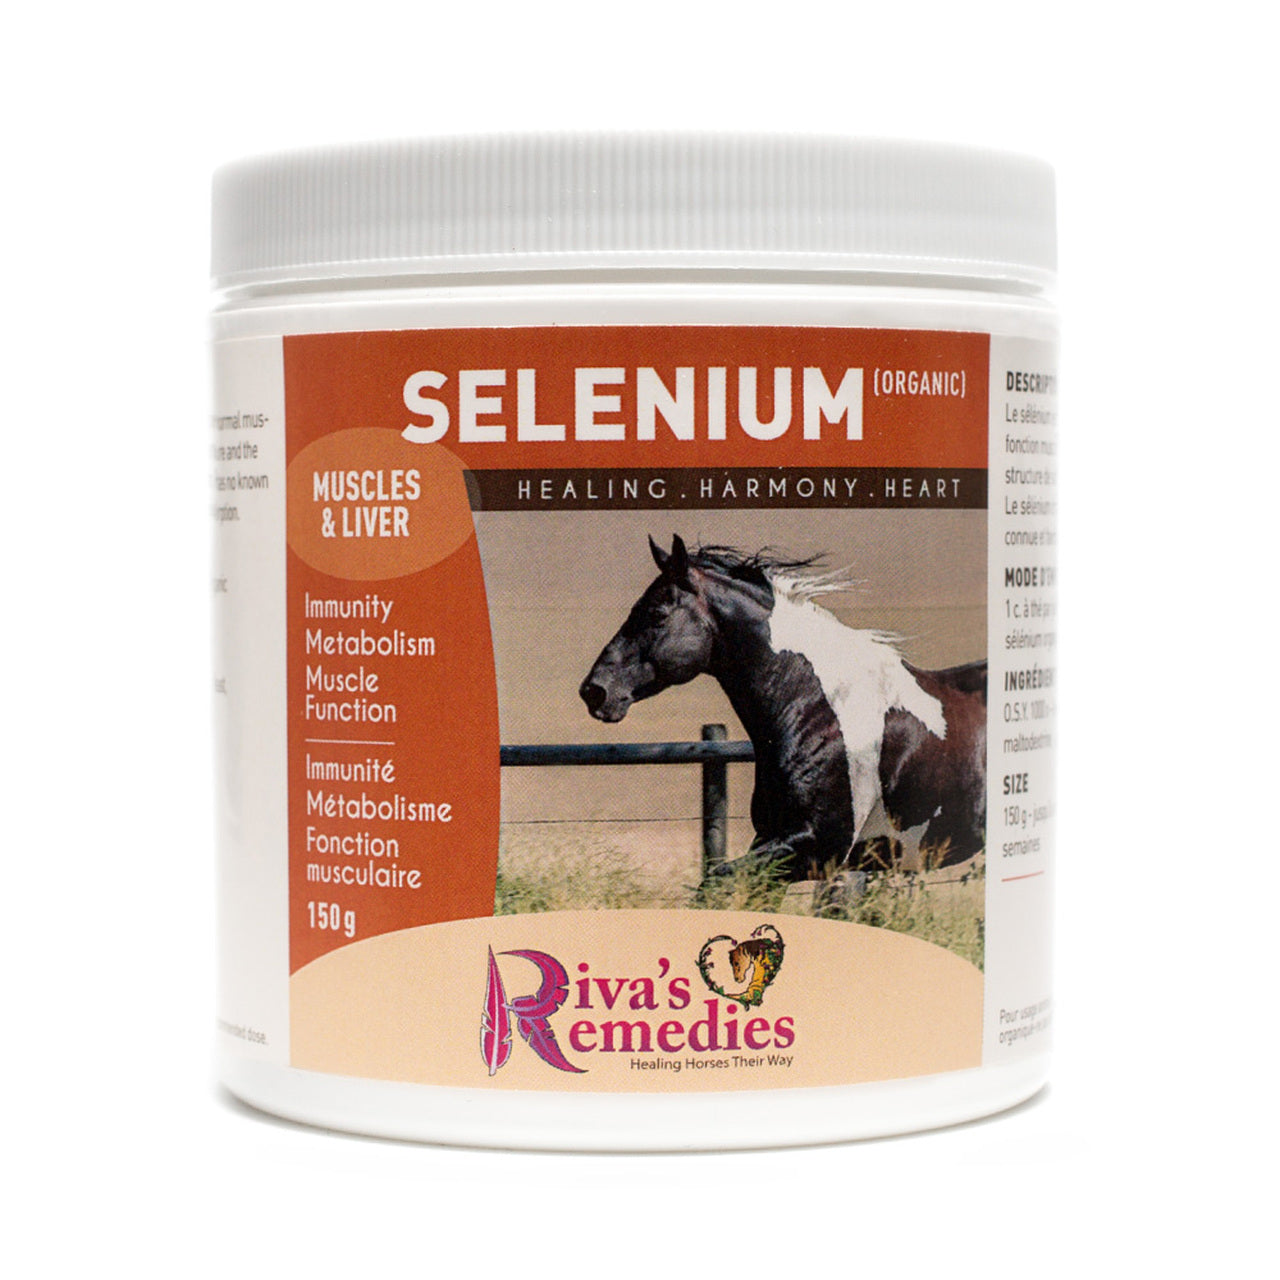 Riva's Remedies Equine Organic Selenium - 200g